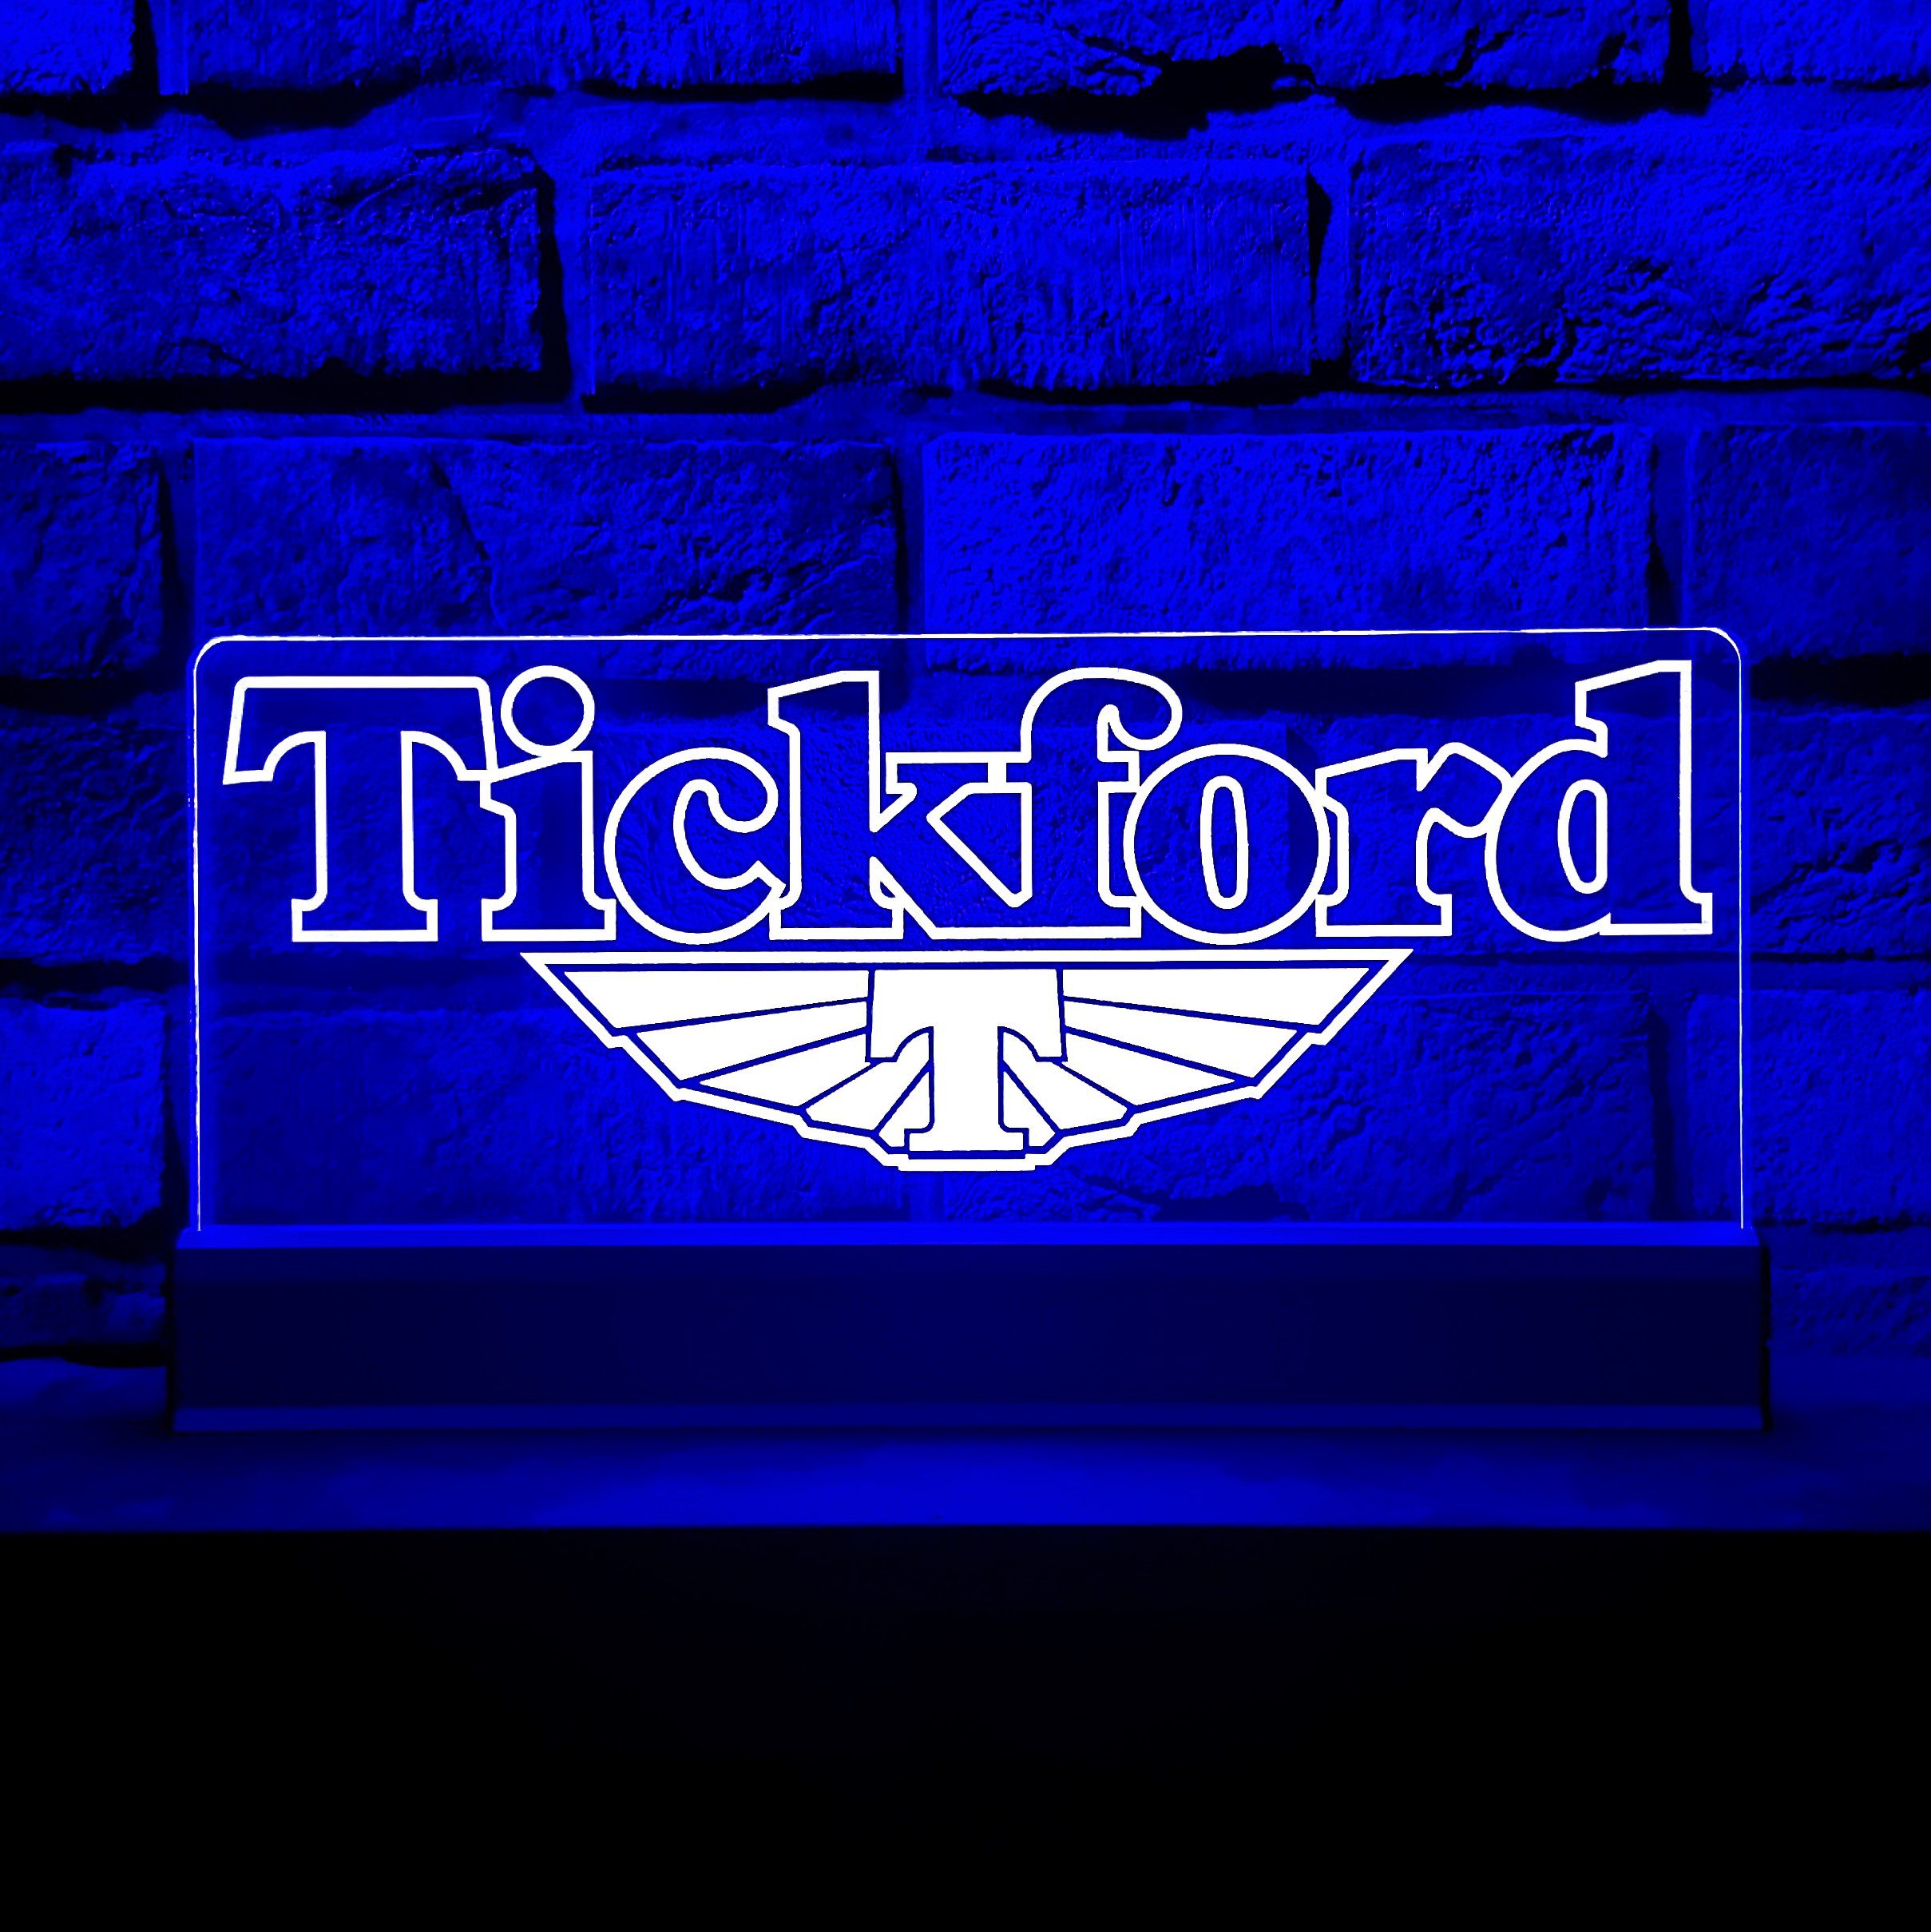 Tickford LED Signs Brisbane